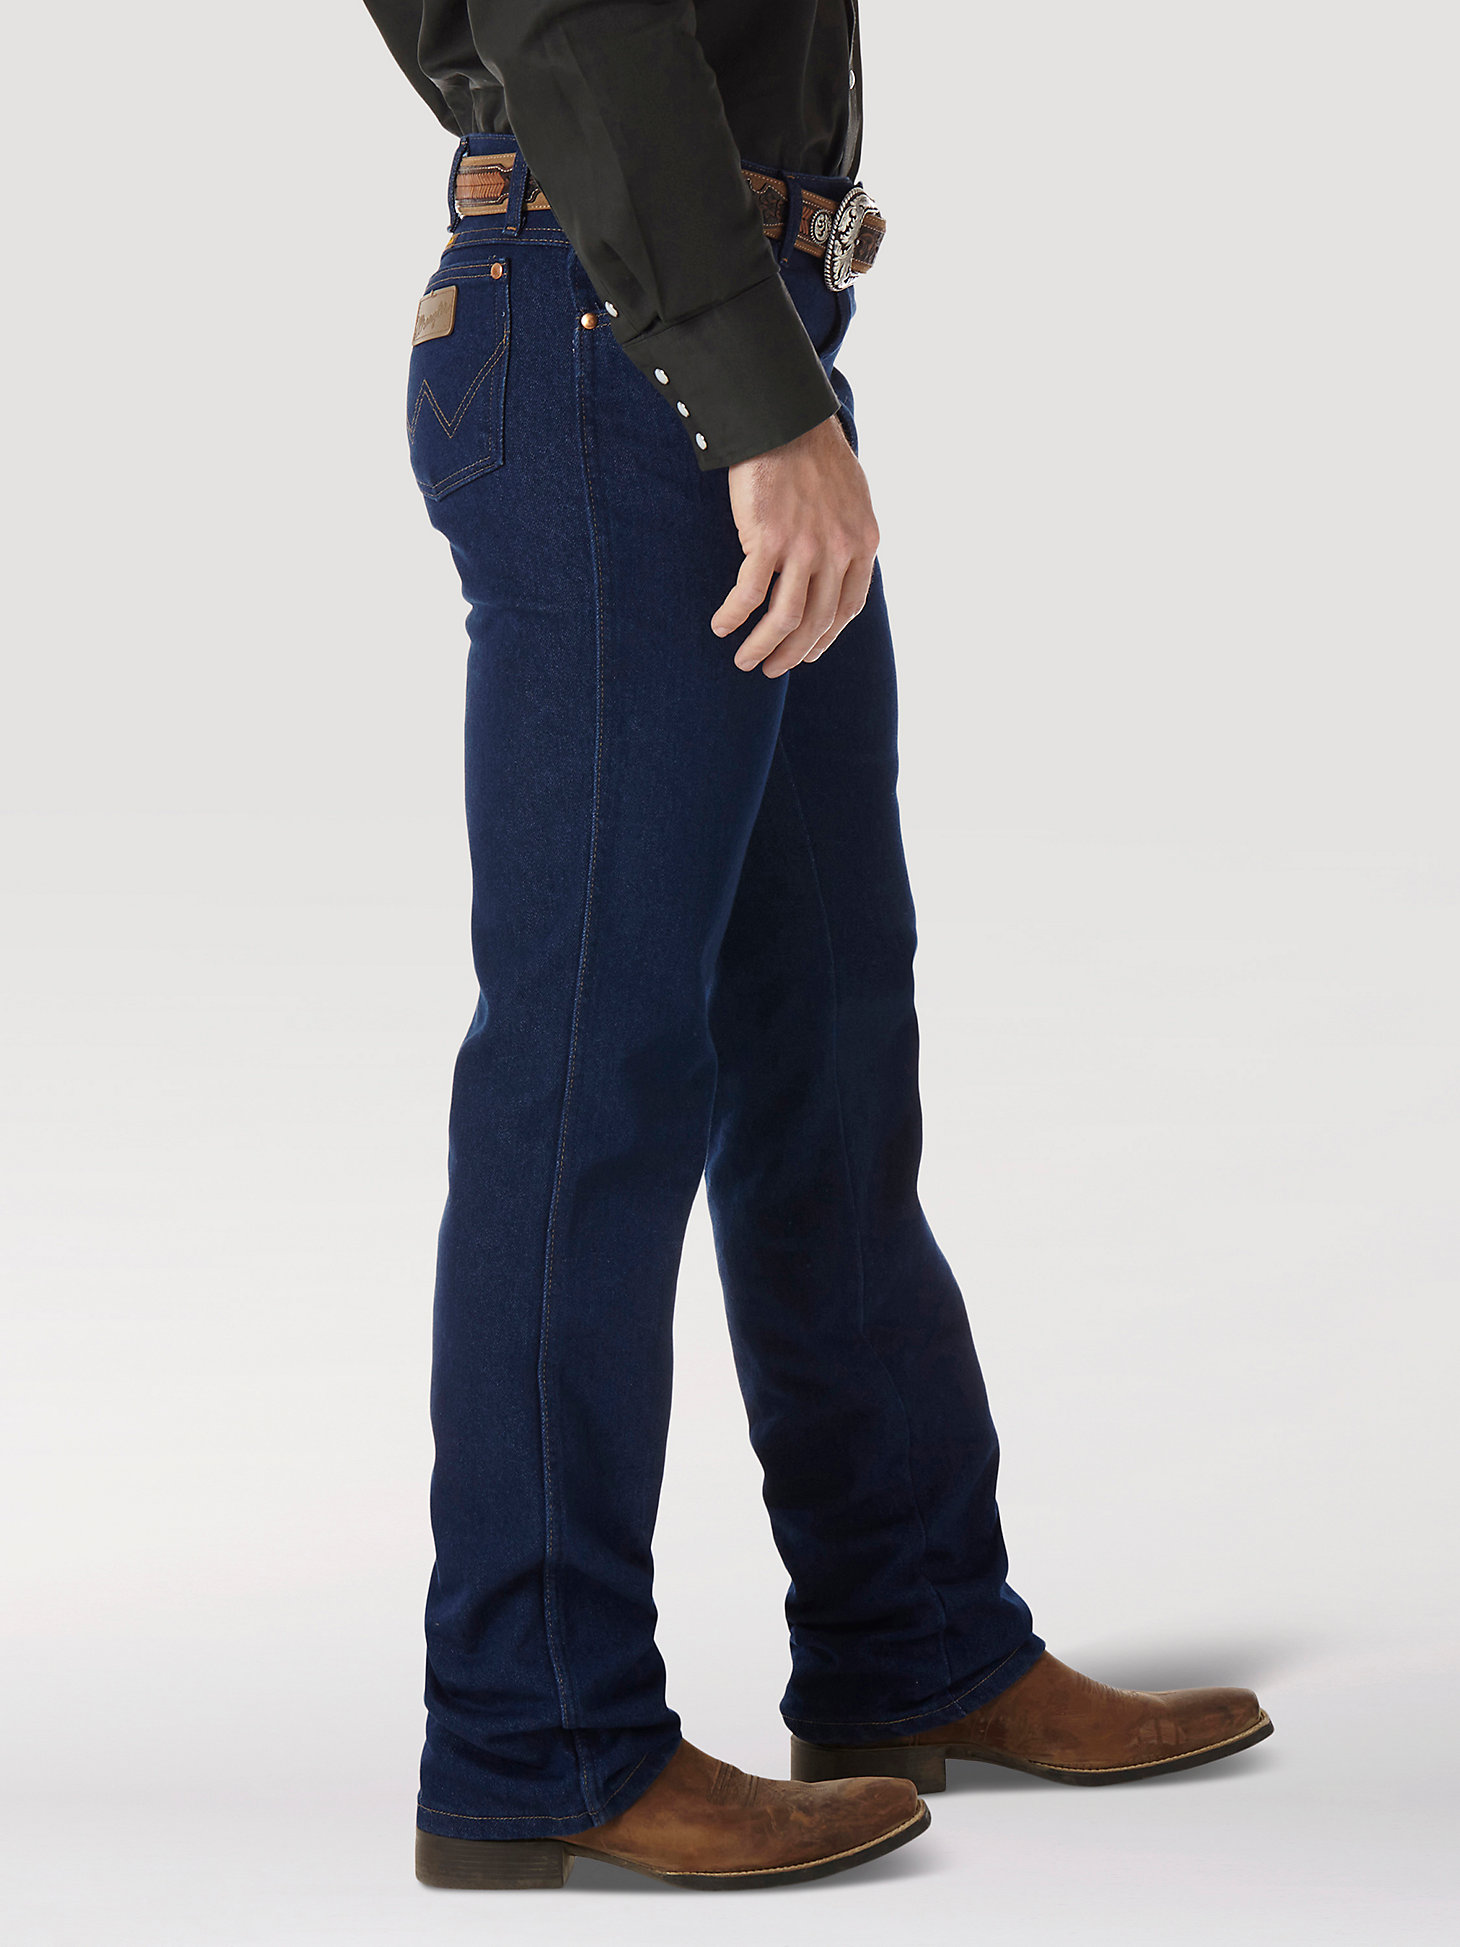 Wrangler® Cowboy Cut® Stretch Slim Fit Jean in Indigo Stretch alternative view 1